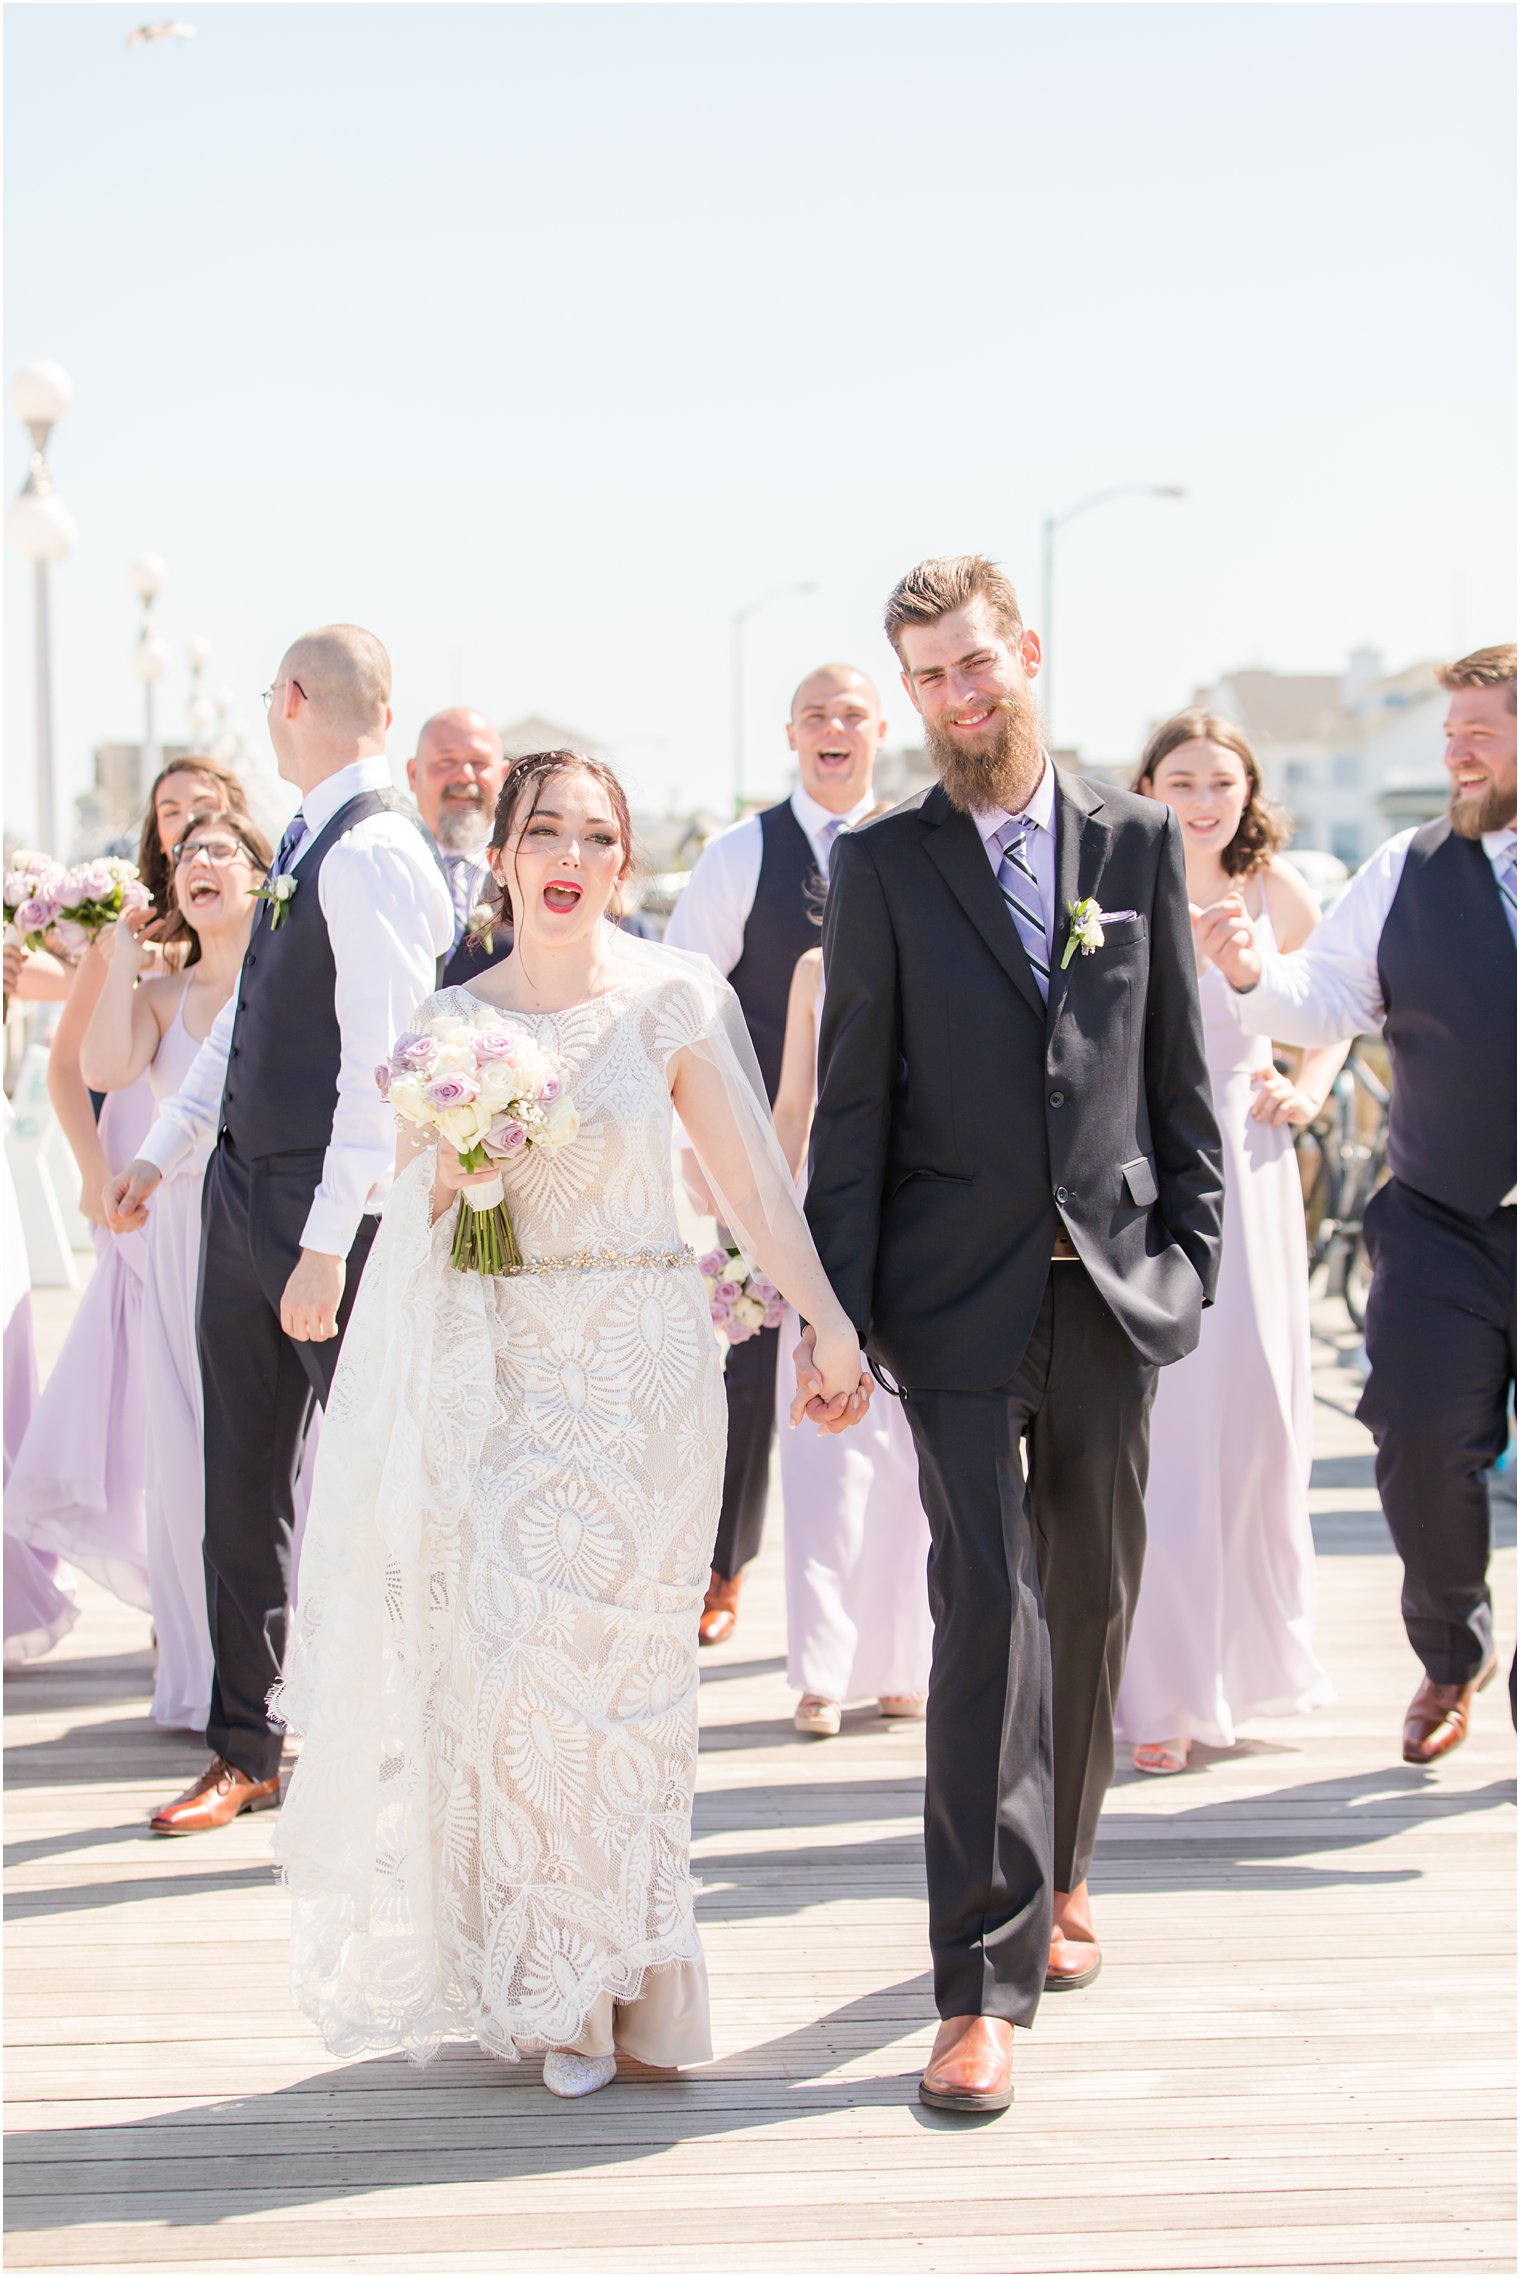 newlyweds walk down boardwalk with bridal party on beach